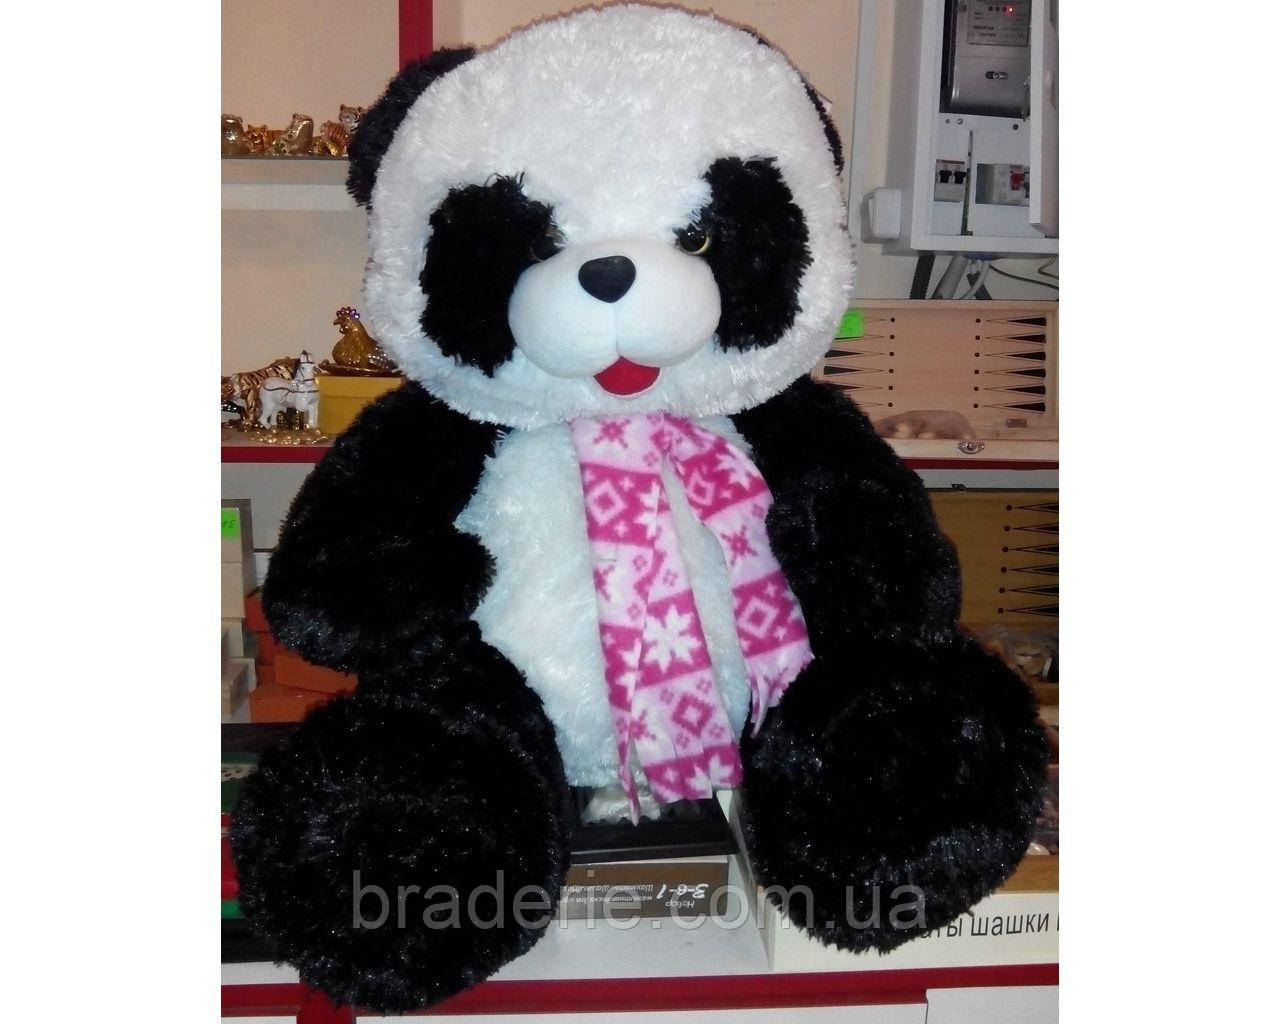 М'яка іграшка Ведмідь Панда із шарфом 2154-62